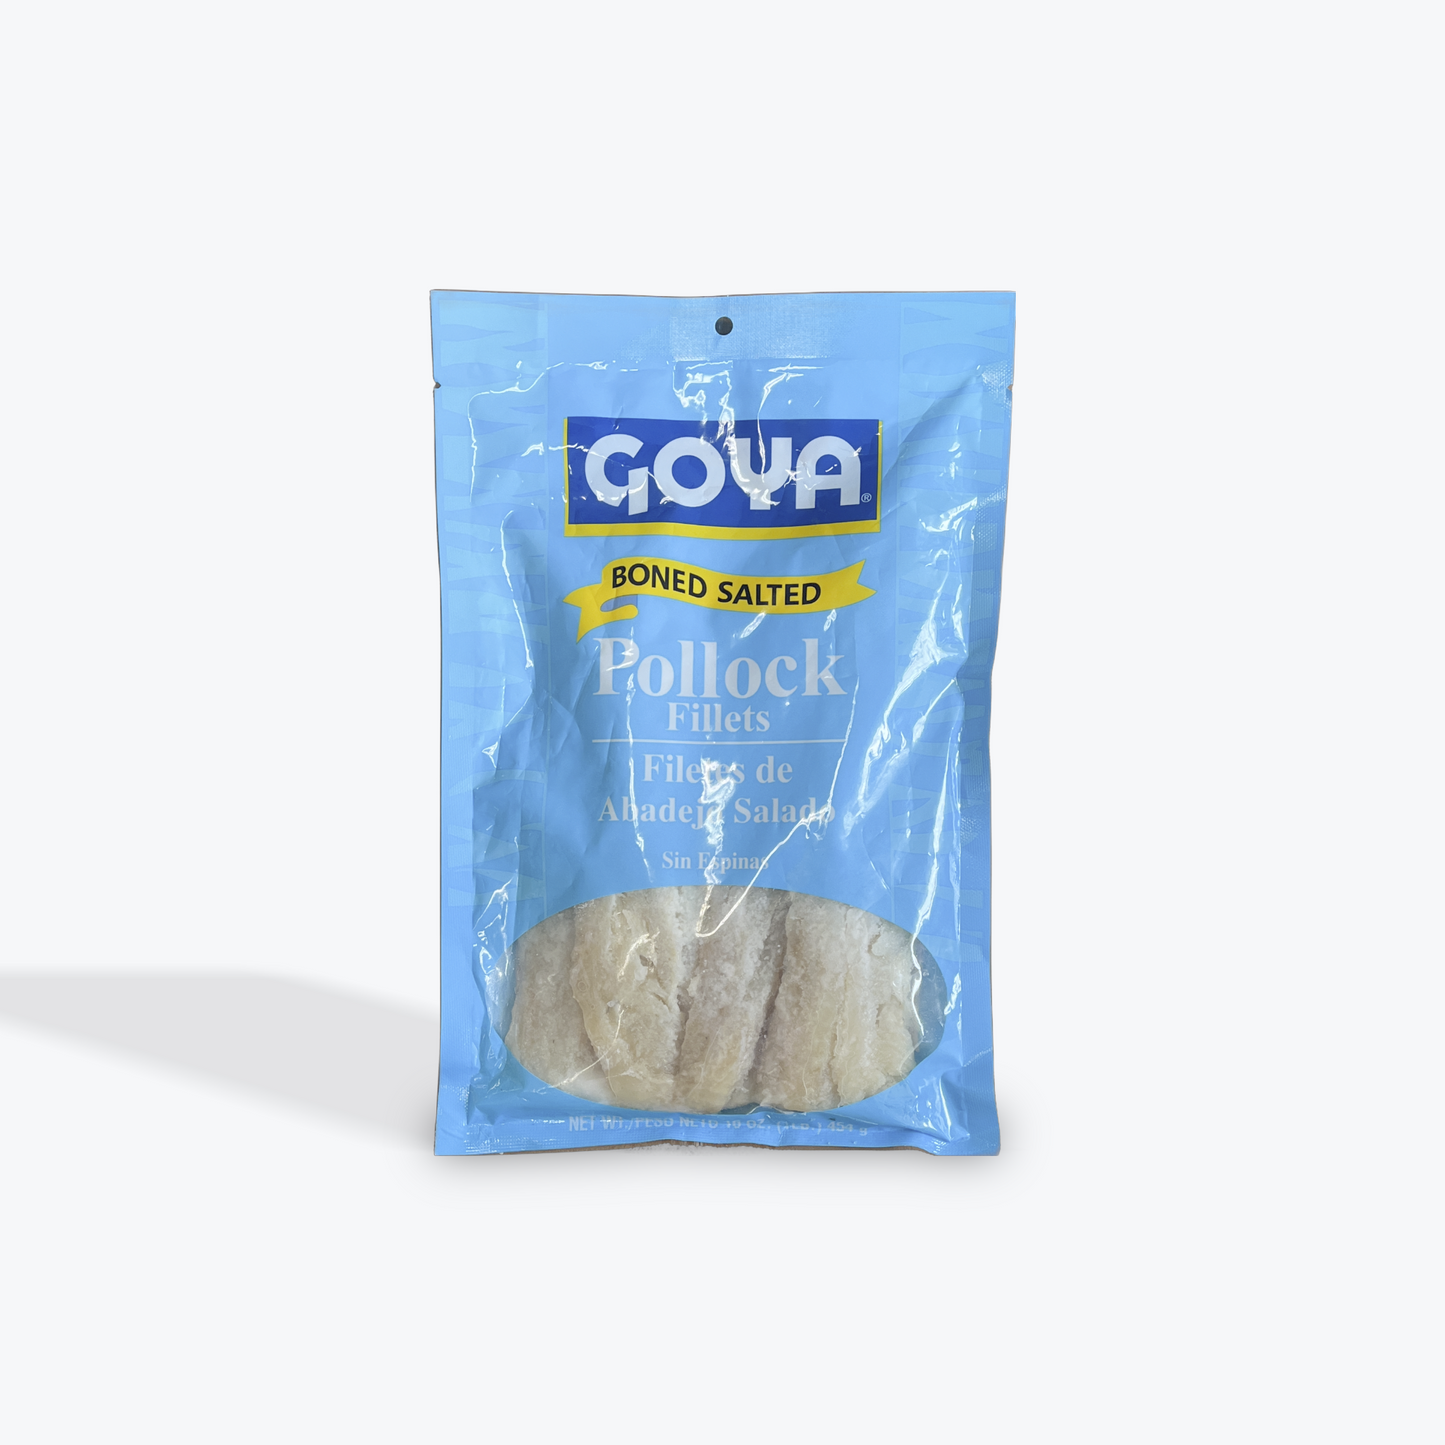 Goya - Pollock fillets, 16 oz, Single bag